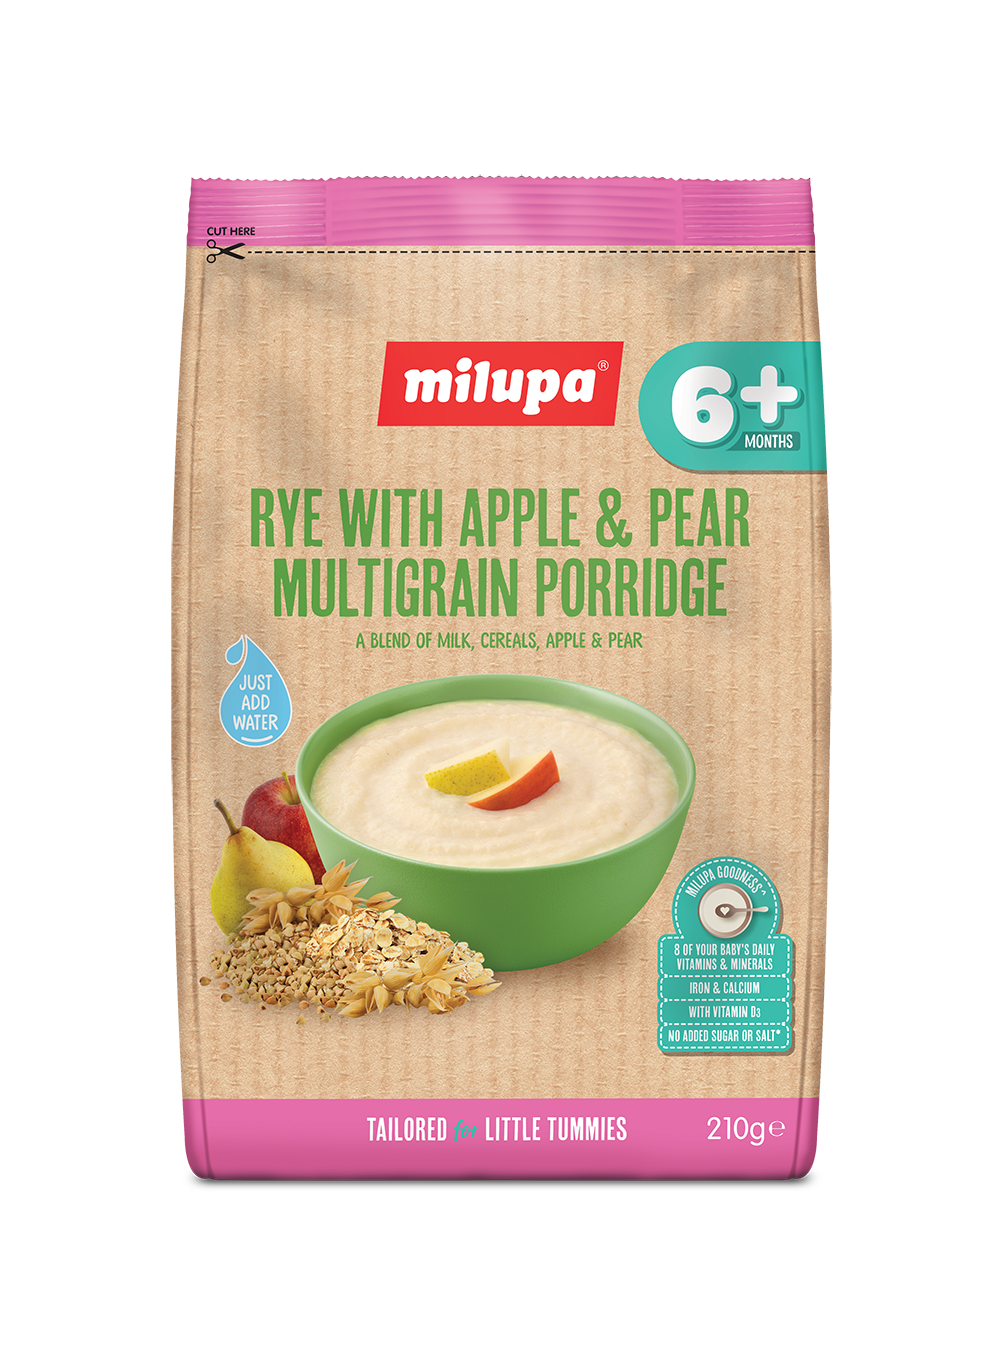 Rye with apple pear multigrain porridge